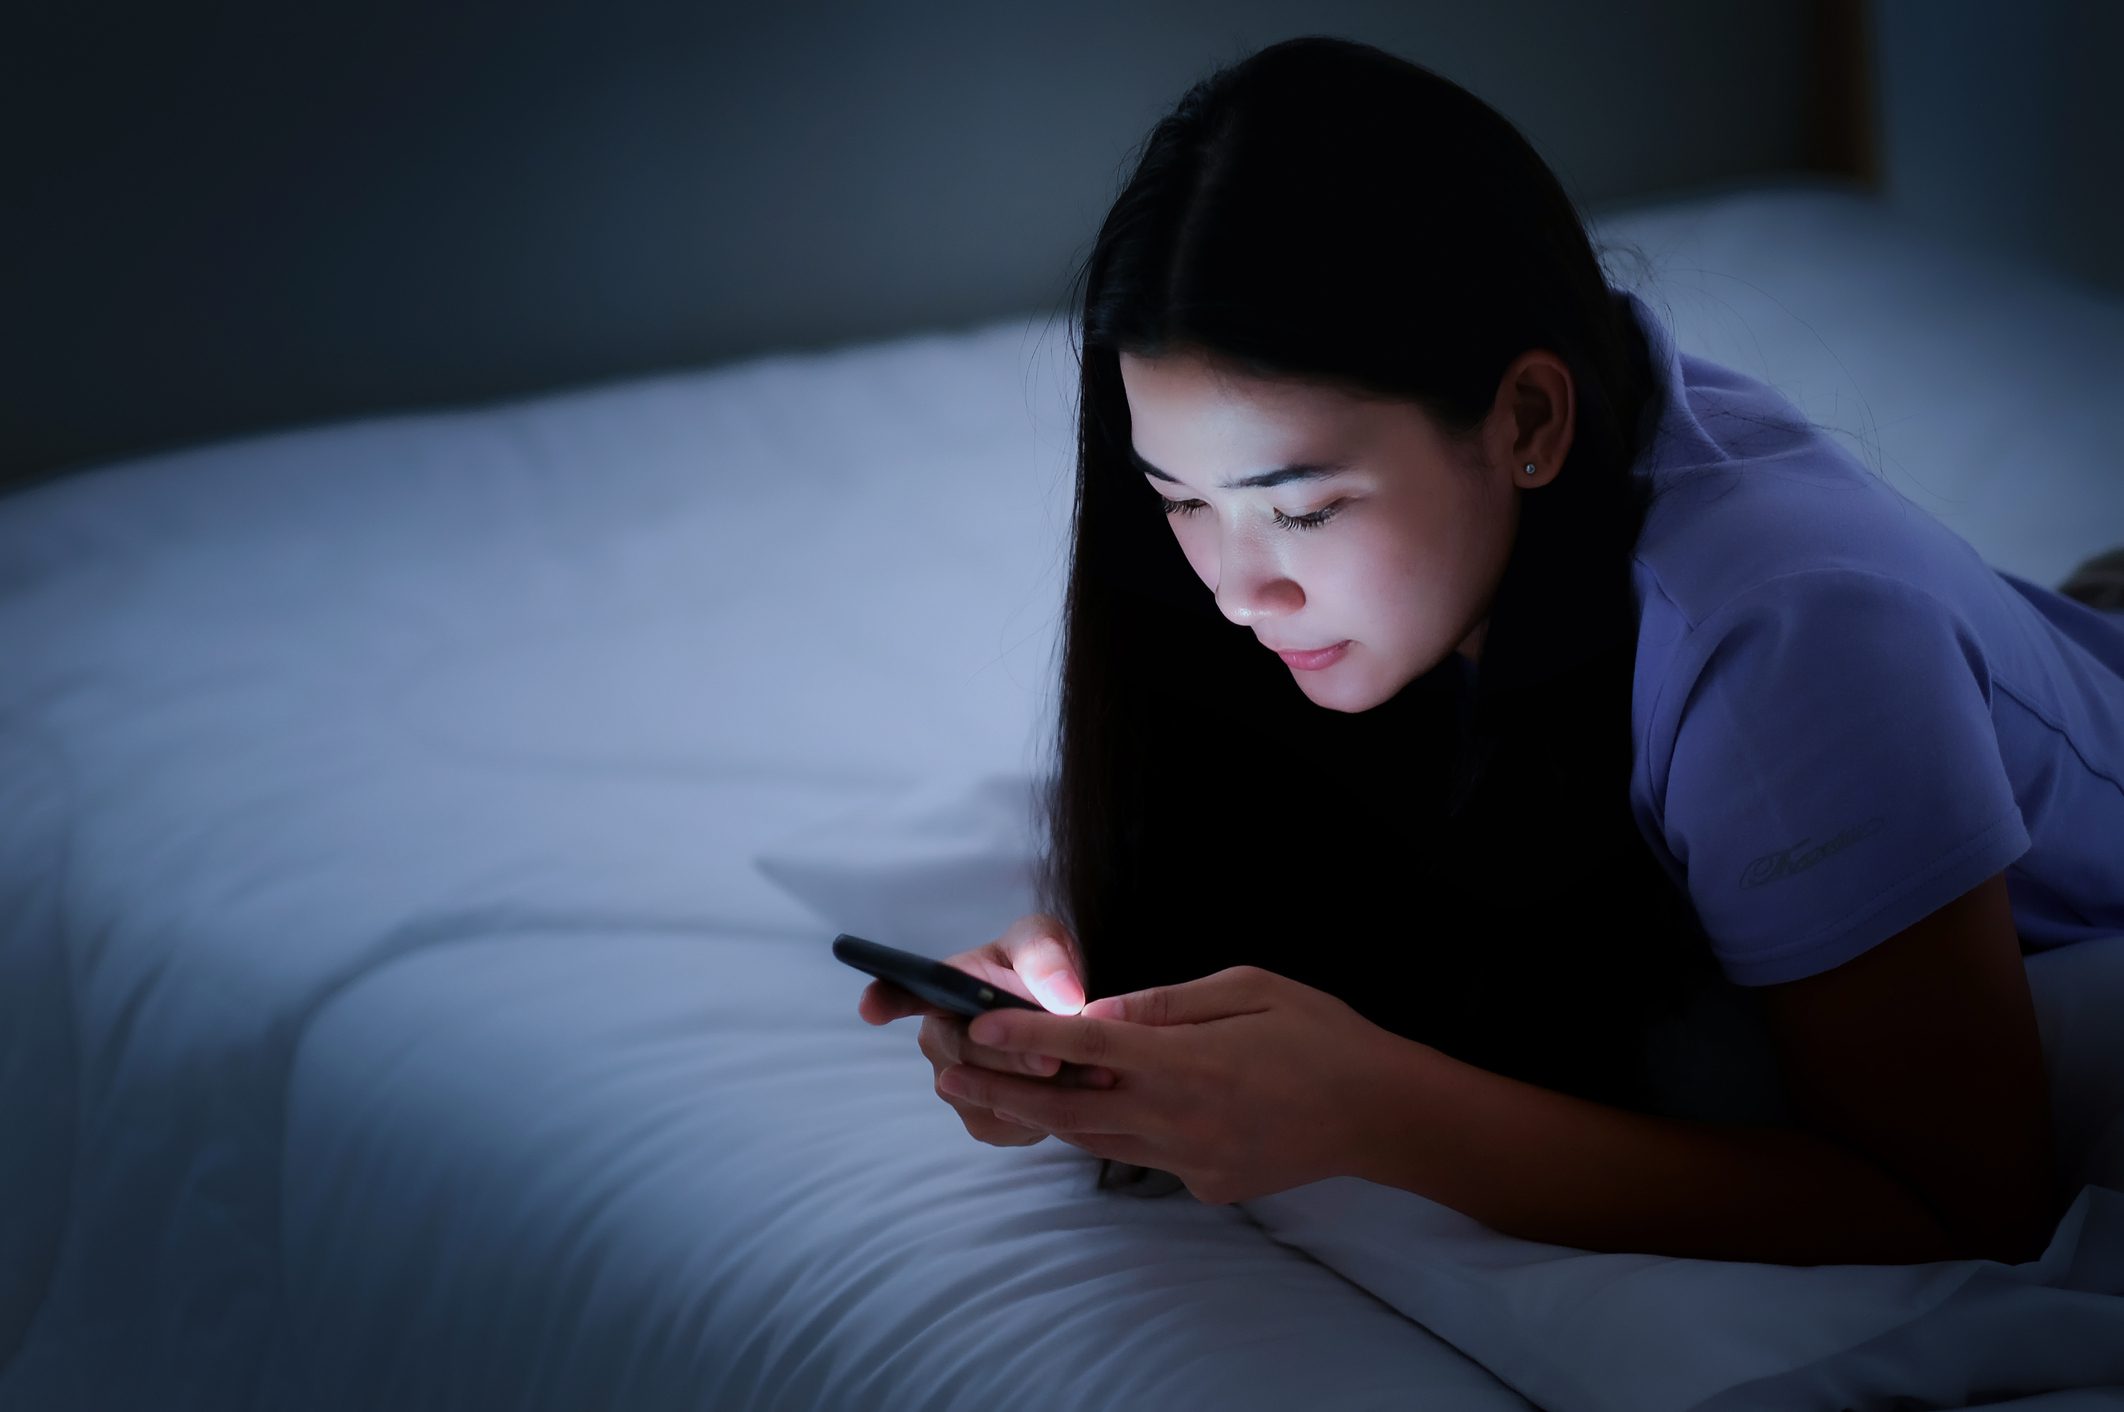 How Does Blue Light Affect Sleep?